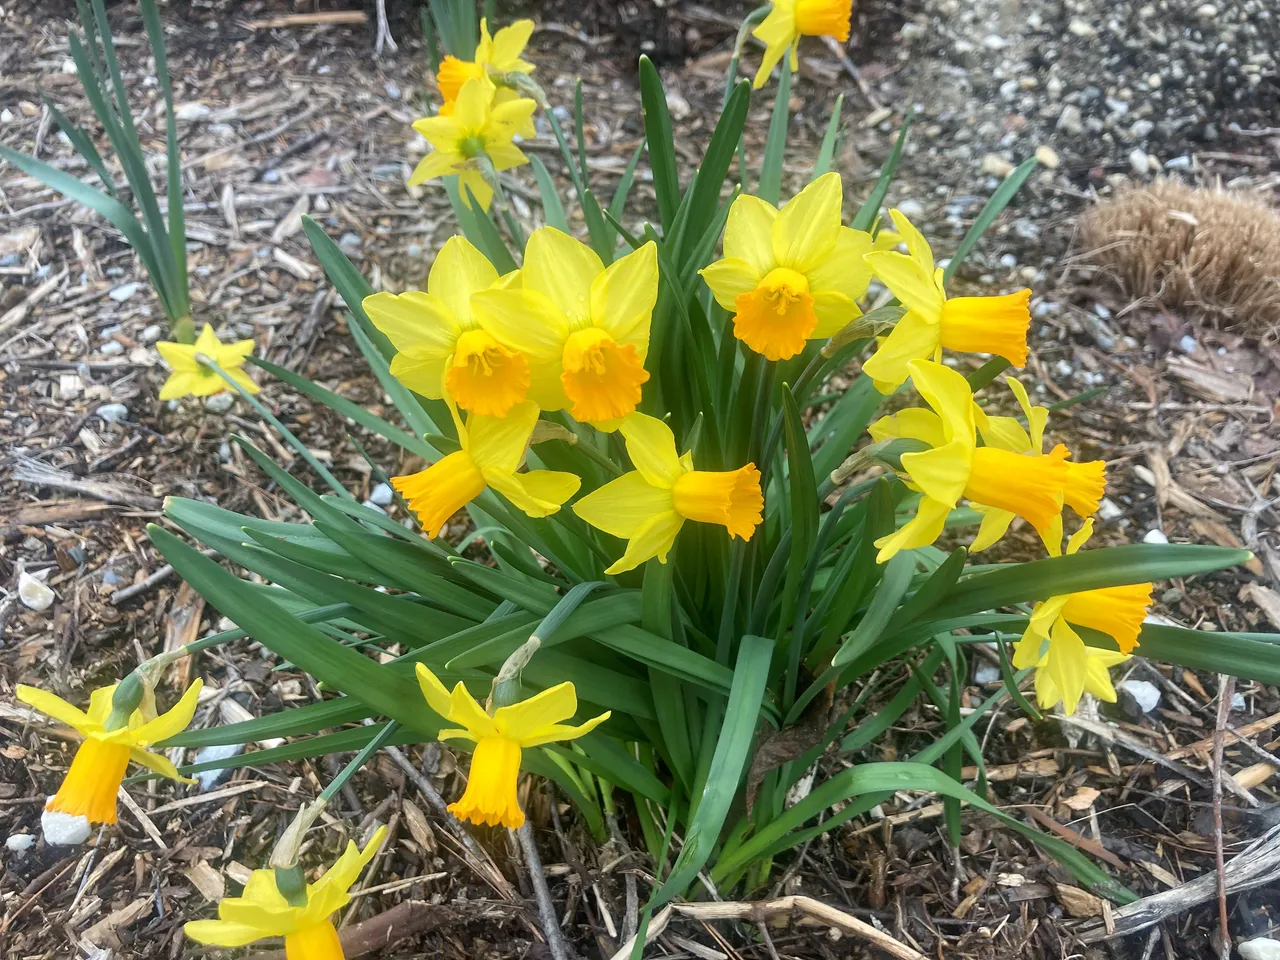 Daffodil cluster